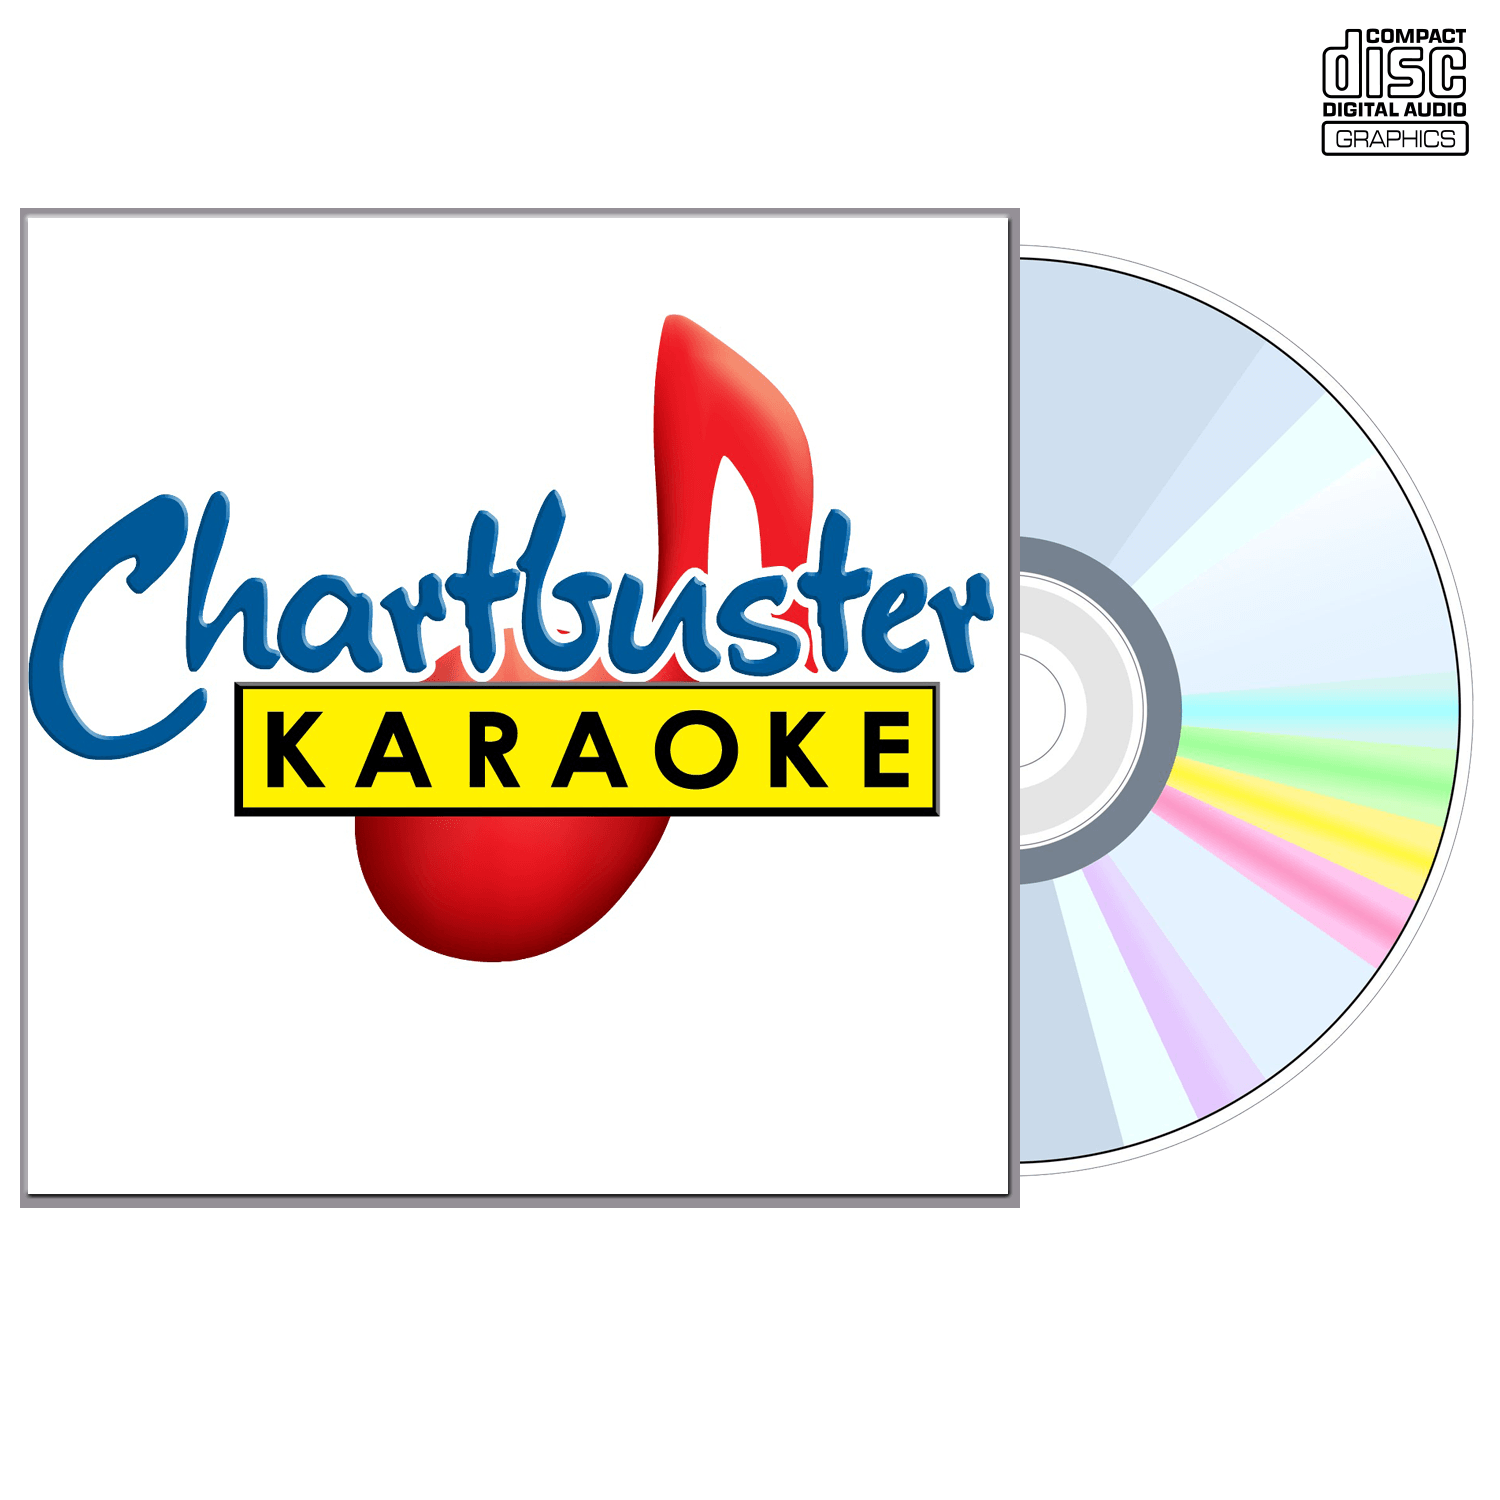 Staind - CD+G - Chartbuster Karaoke - Karaoke Home Entertainment